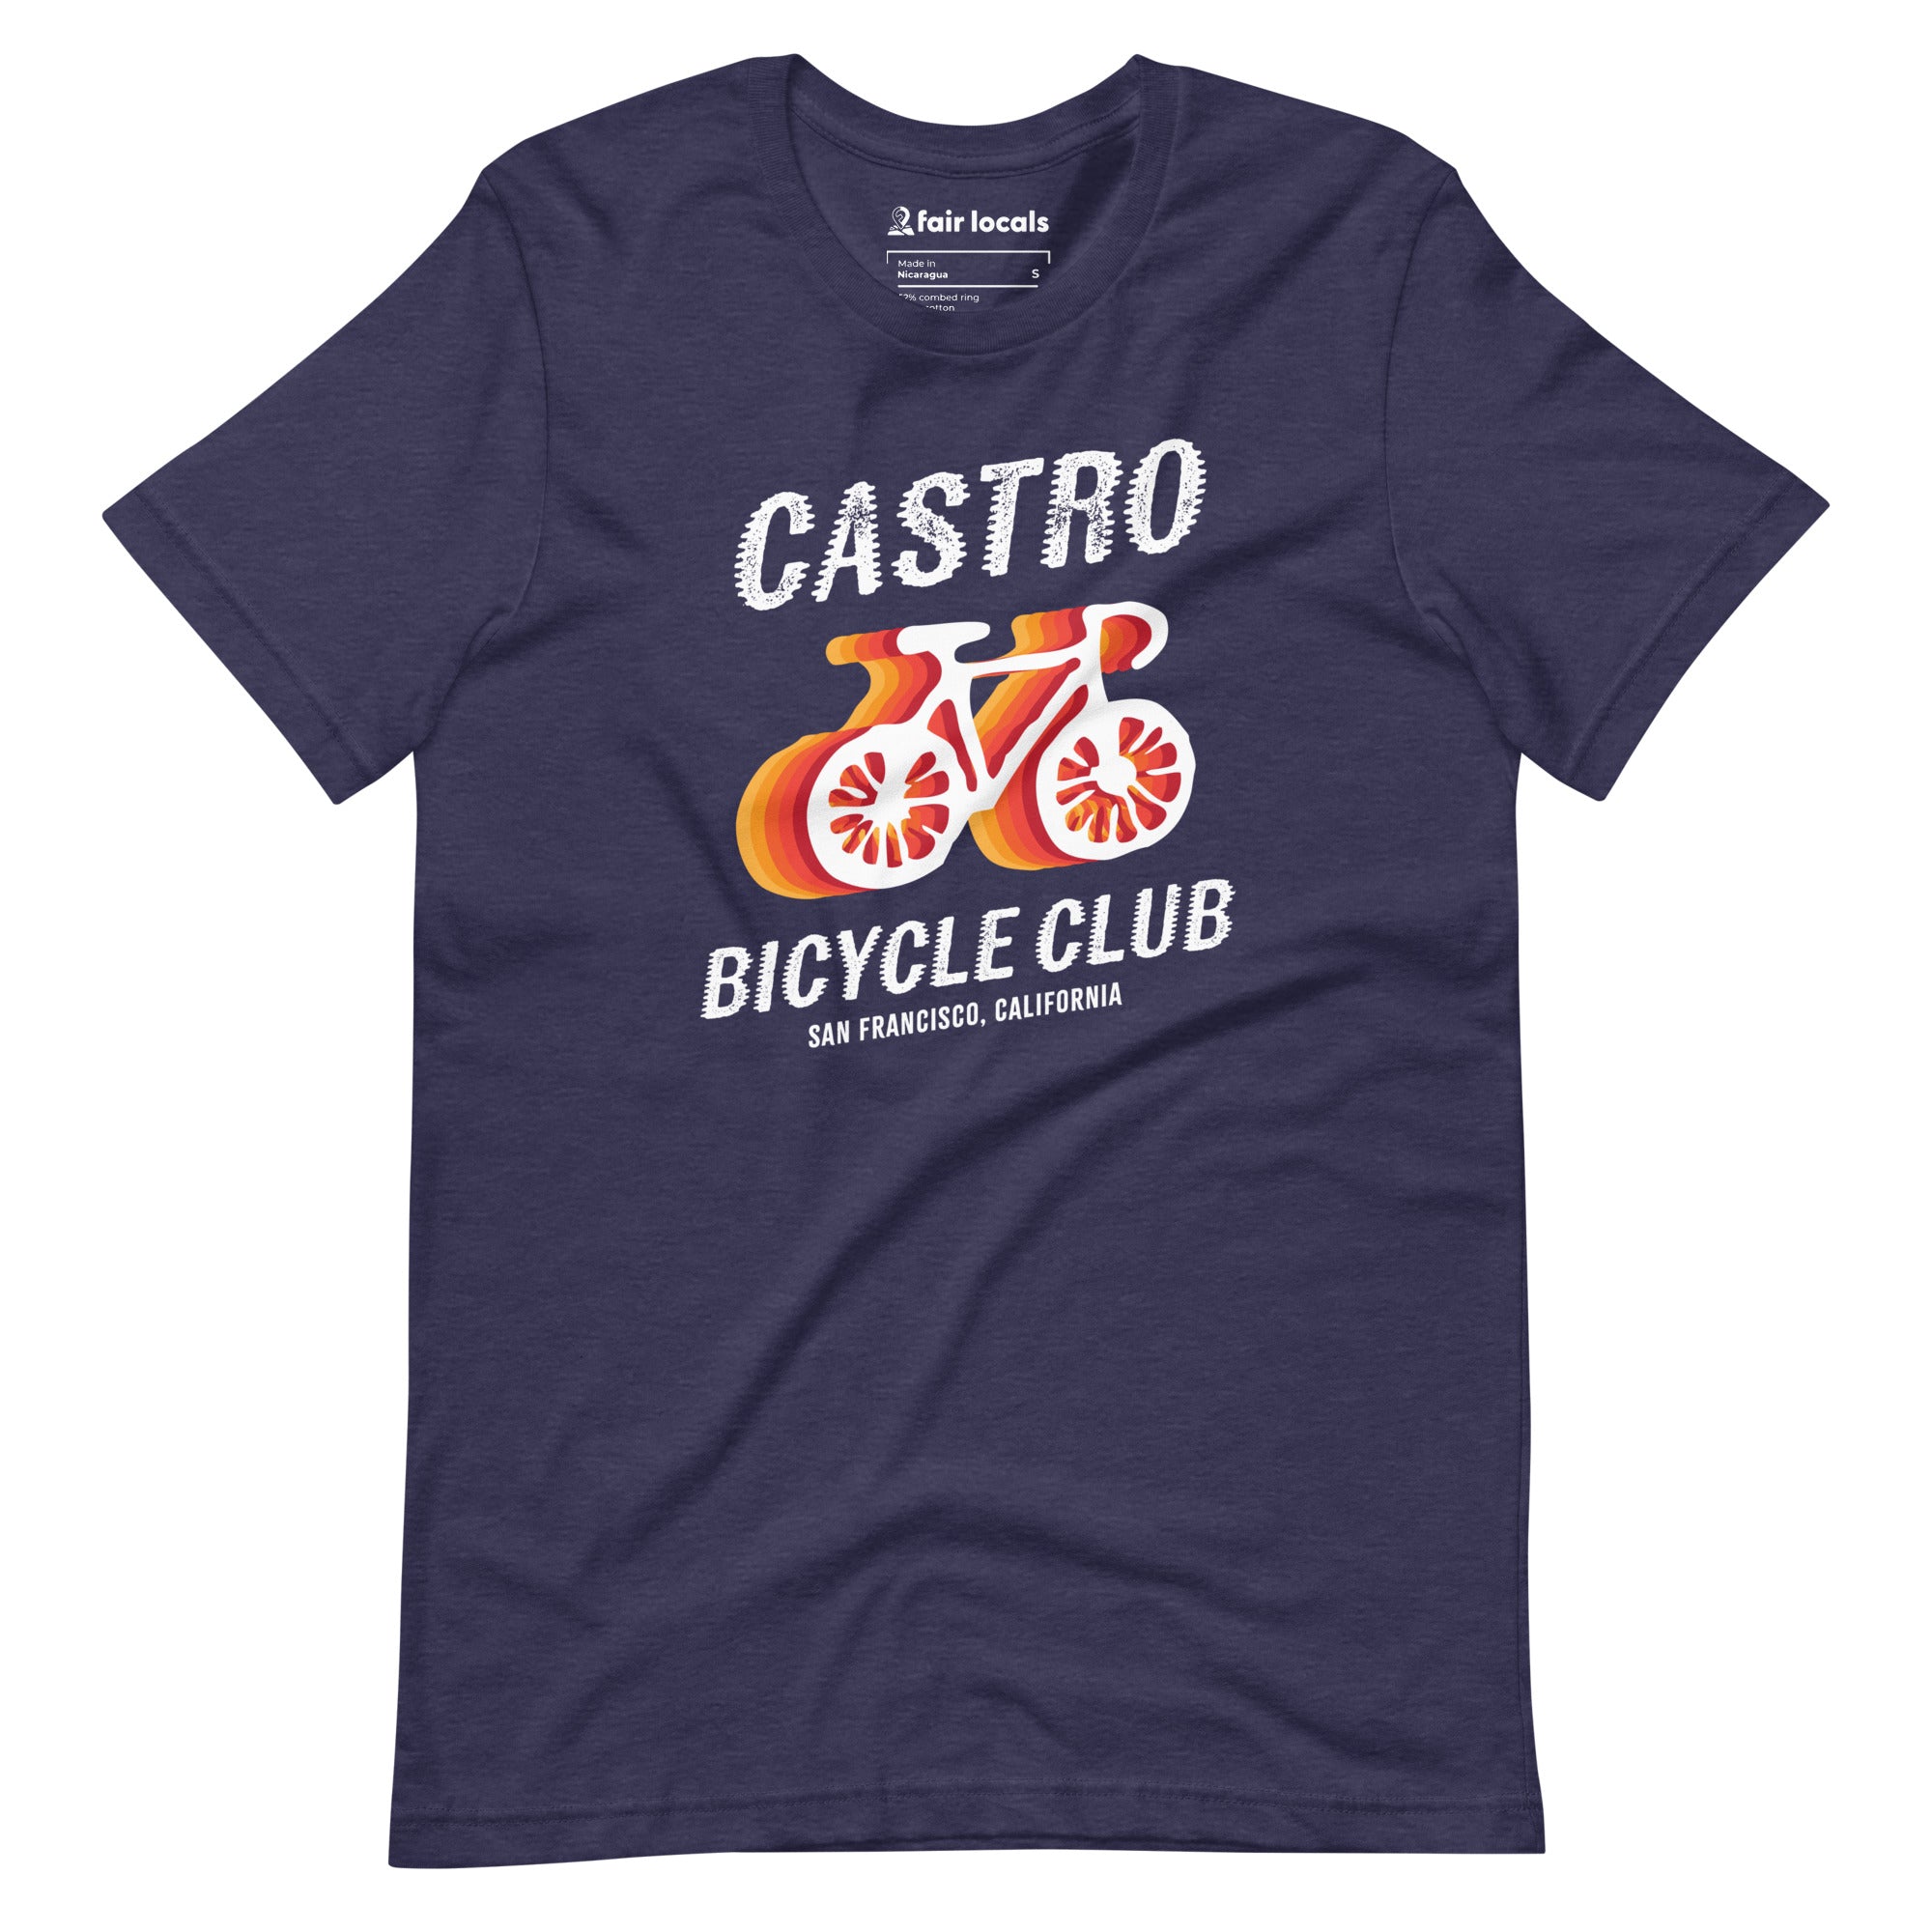 Bicycle Club T-Shirt - Castro | San Francisco, CA